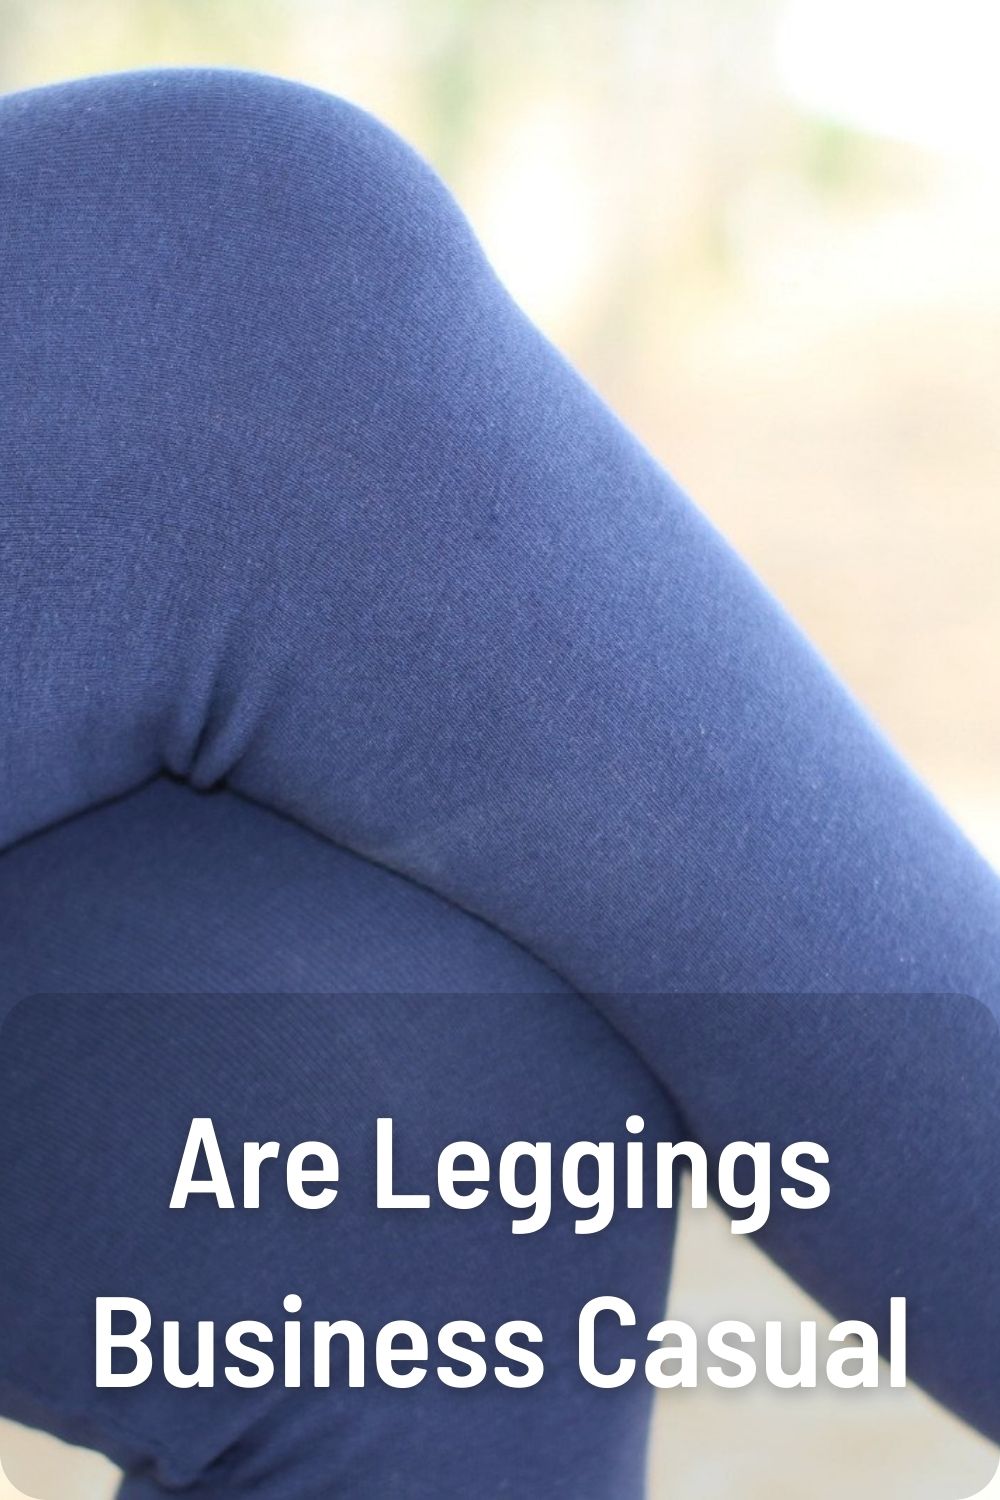 Are Leggings Business Casual